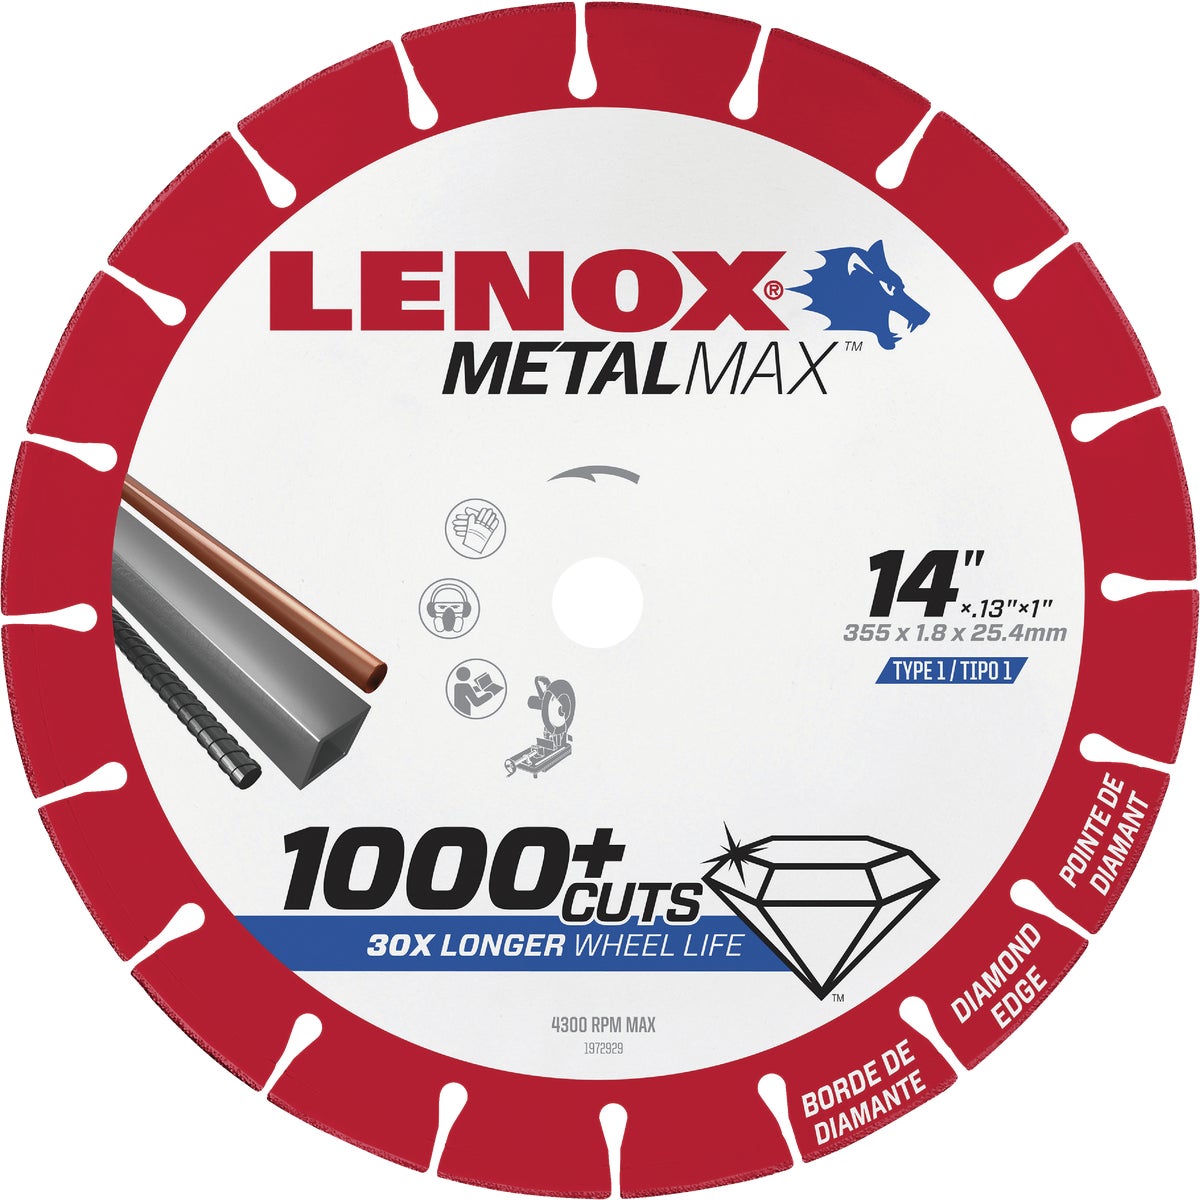 Lenox MetalMax 14 In. Segmented Rim Dry Cut Diamond Blade